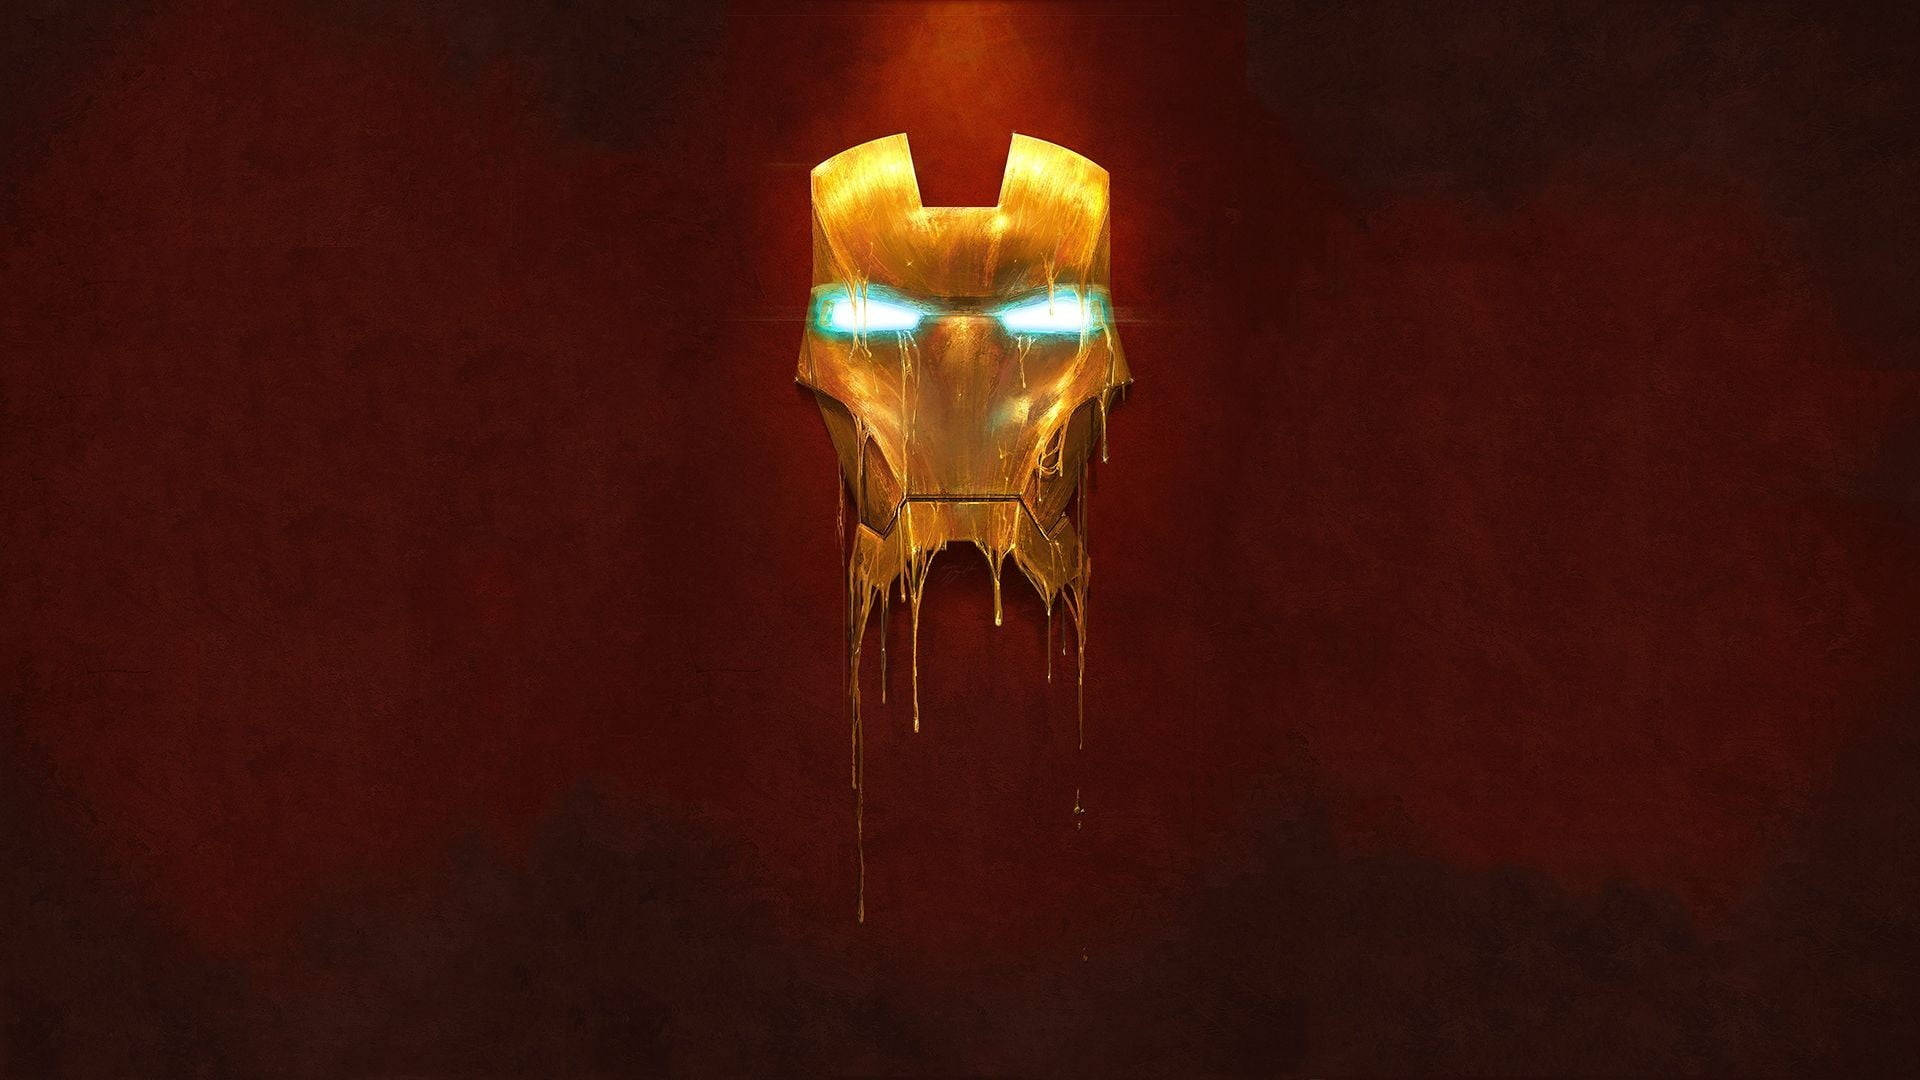 Hd Superhero Iron Man Helmet Background